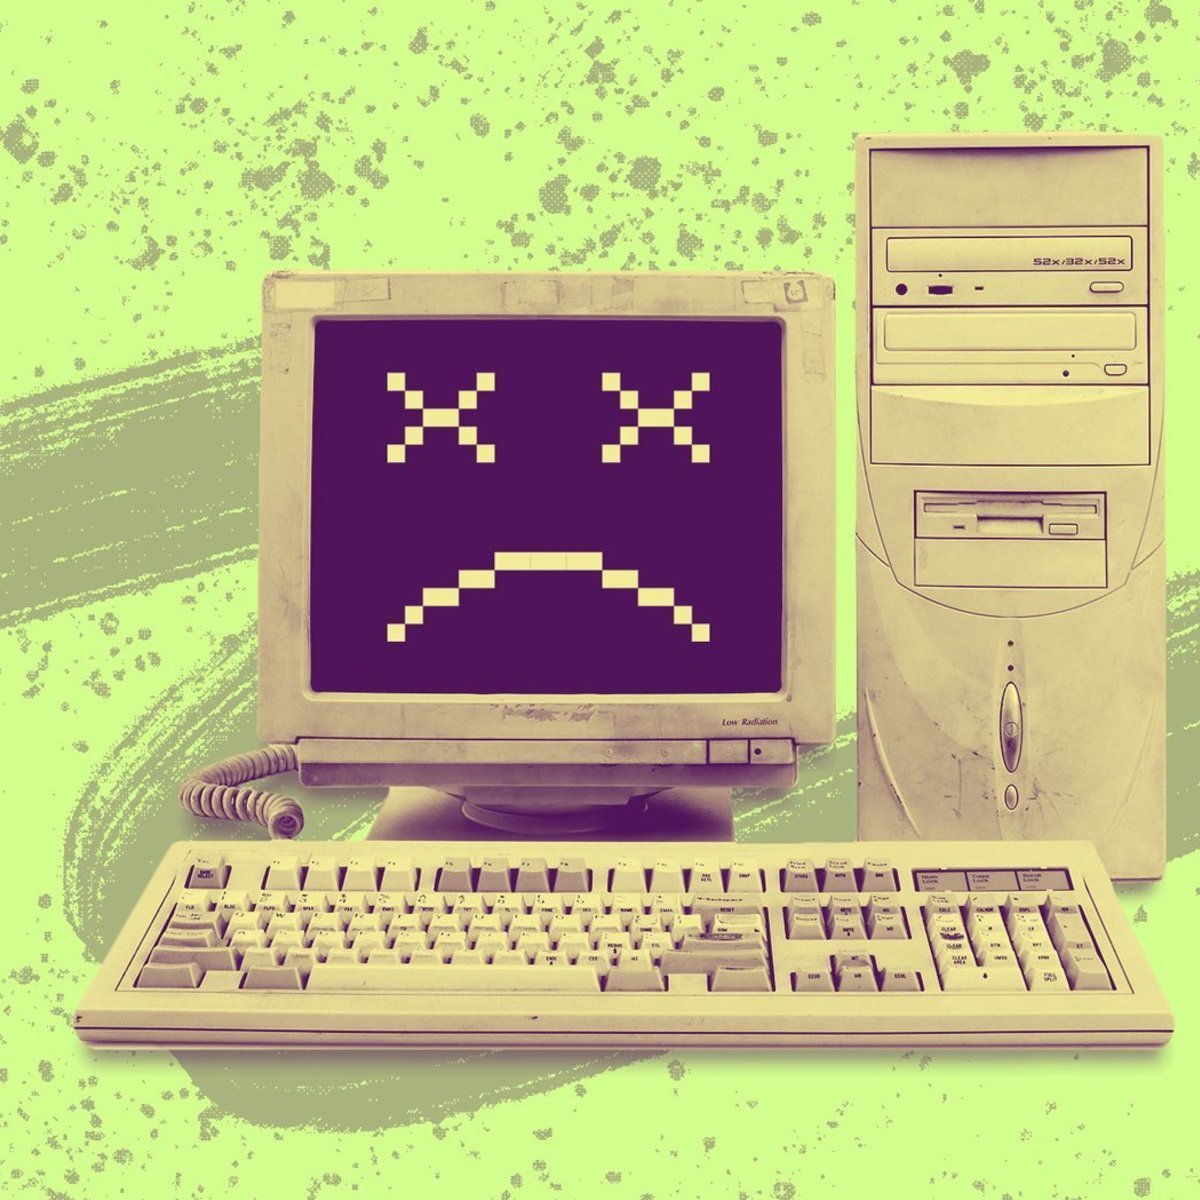 Virus pc. Компьютерные вирусы. Компьютер. Вирус на компьютере. Старые вирусы компьютера.